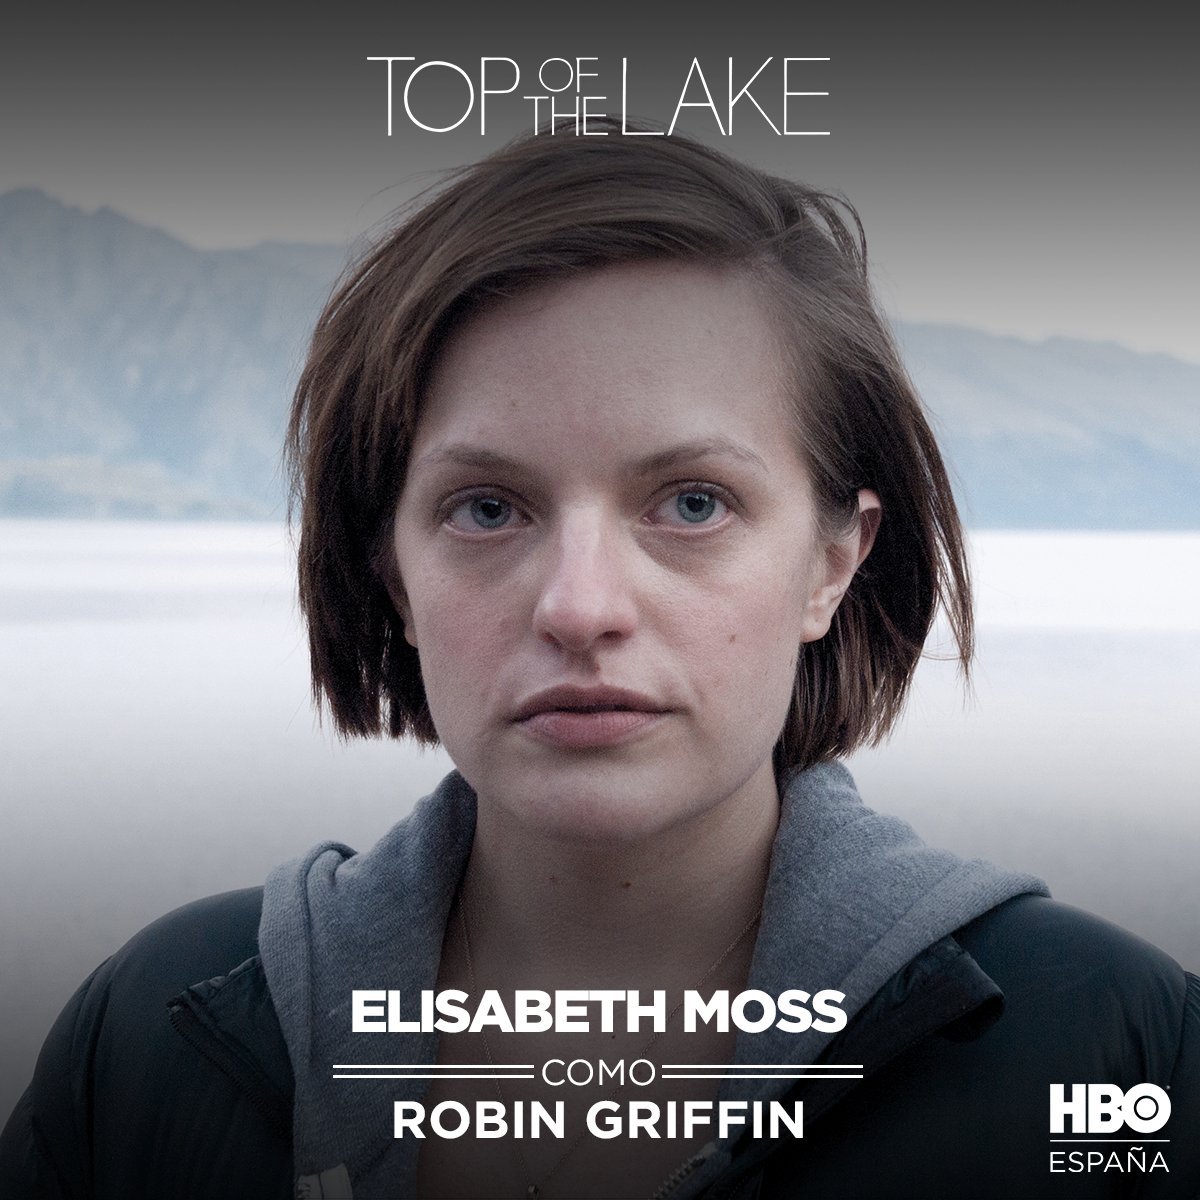 HBO Max on "Nicole Kidman, Elisabeth Moss y Gwendoline Christie protagonizan Top of the Lake: China Girl. Todos los episodios de Top of the Lake están disponibles en https://t.co/Dj8coua9xR https://t.co/A80KJdG5Tx" /